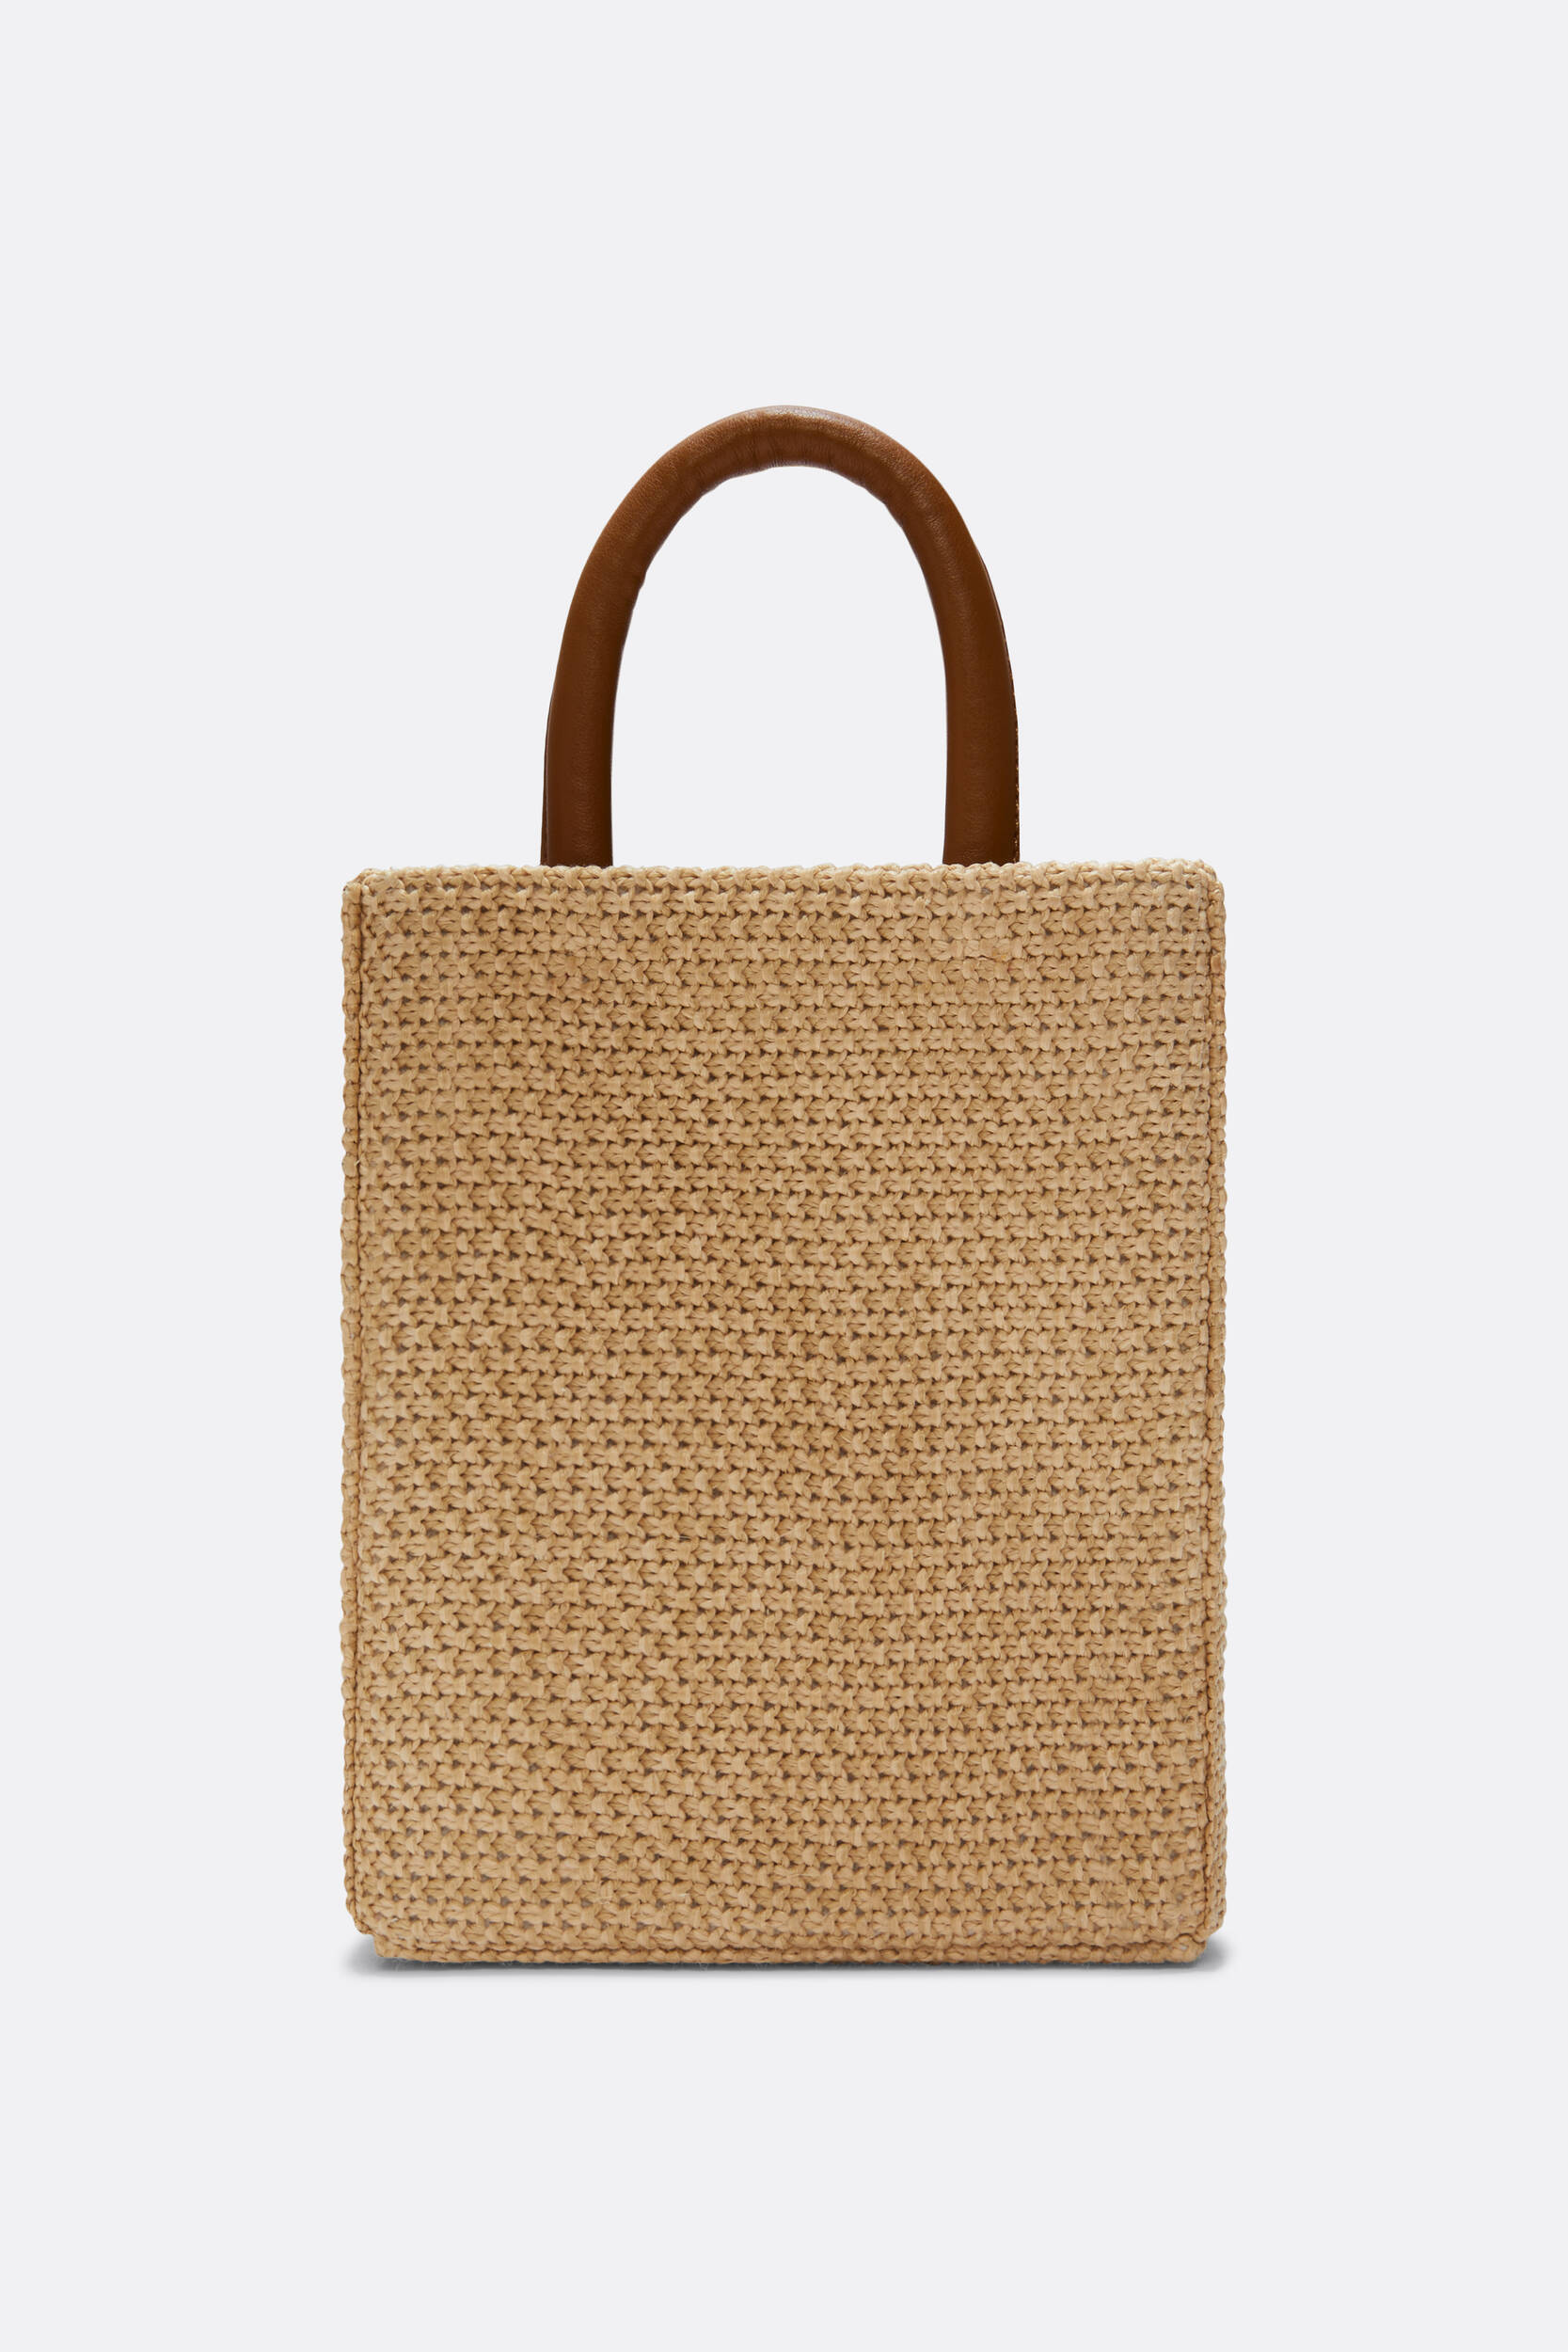 AXEL ARIGATO Shopping Bag MIni in Natural Jute